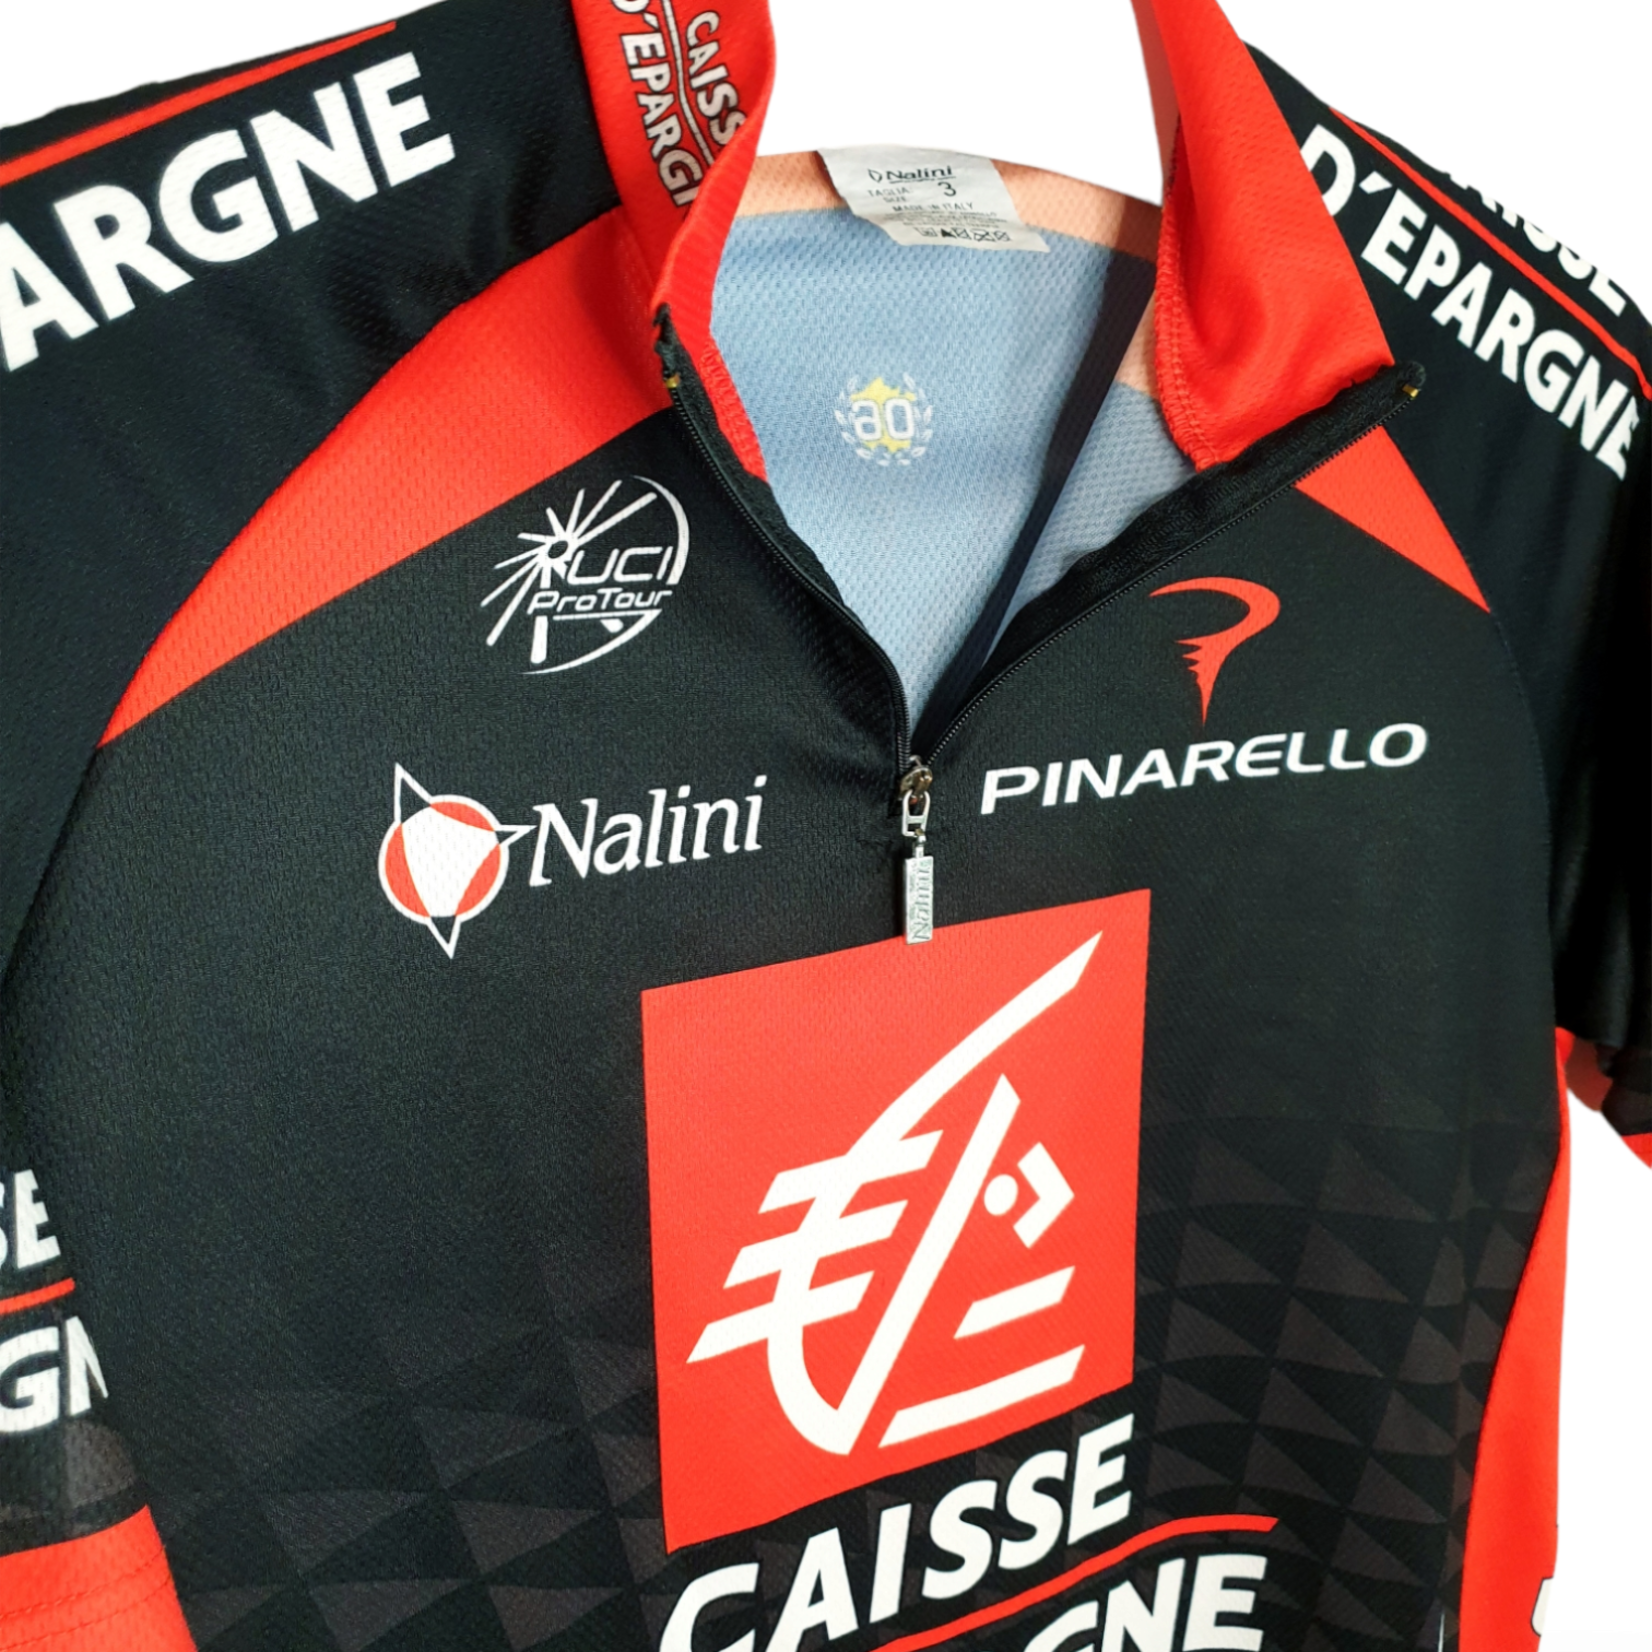 Nalini Original Nalini vintage cycling shirt Caisse d'Epargne 2010